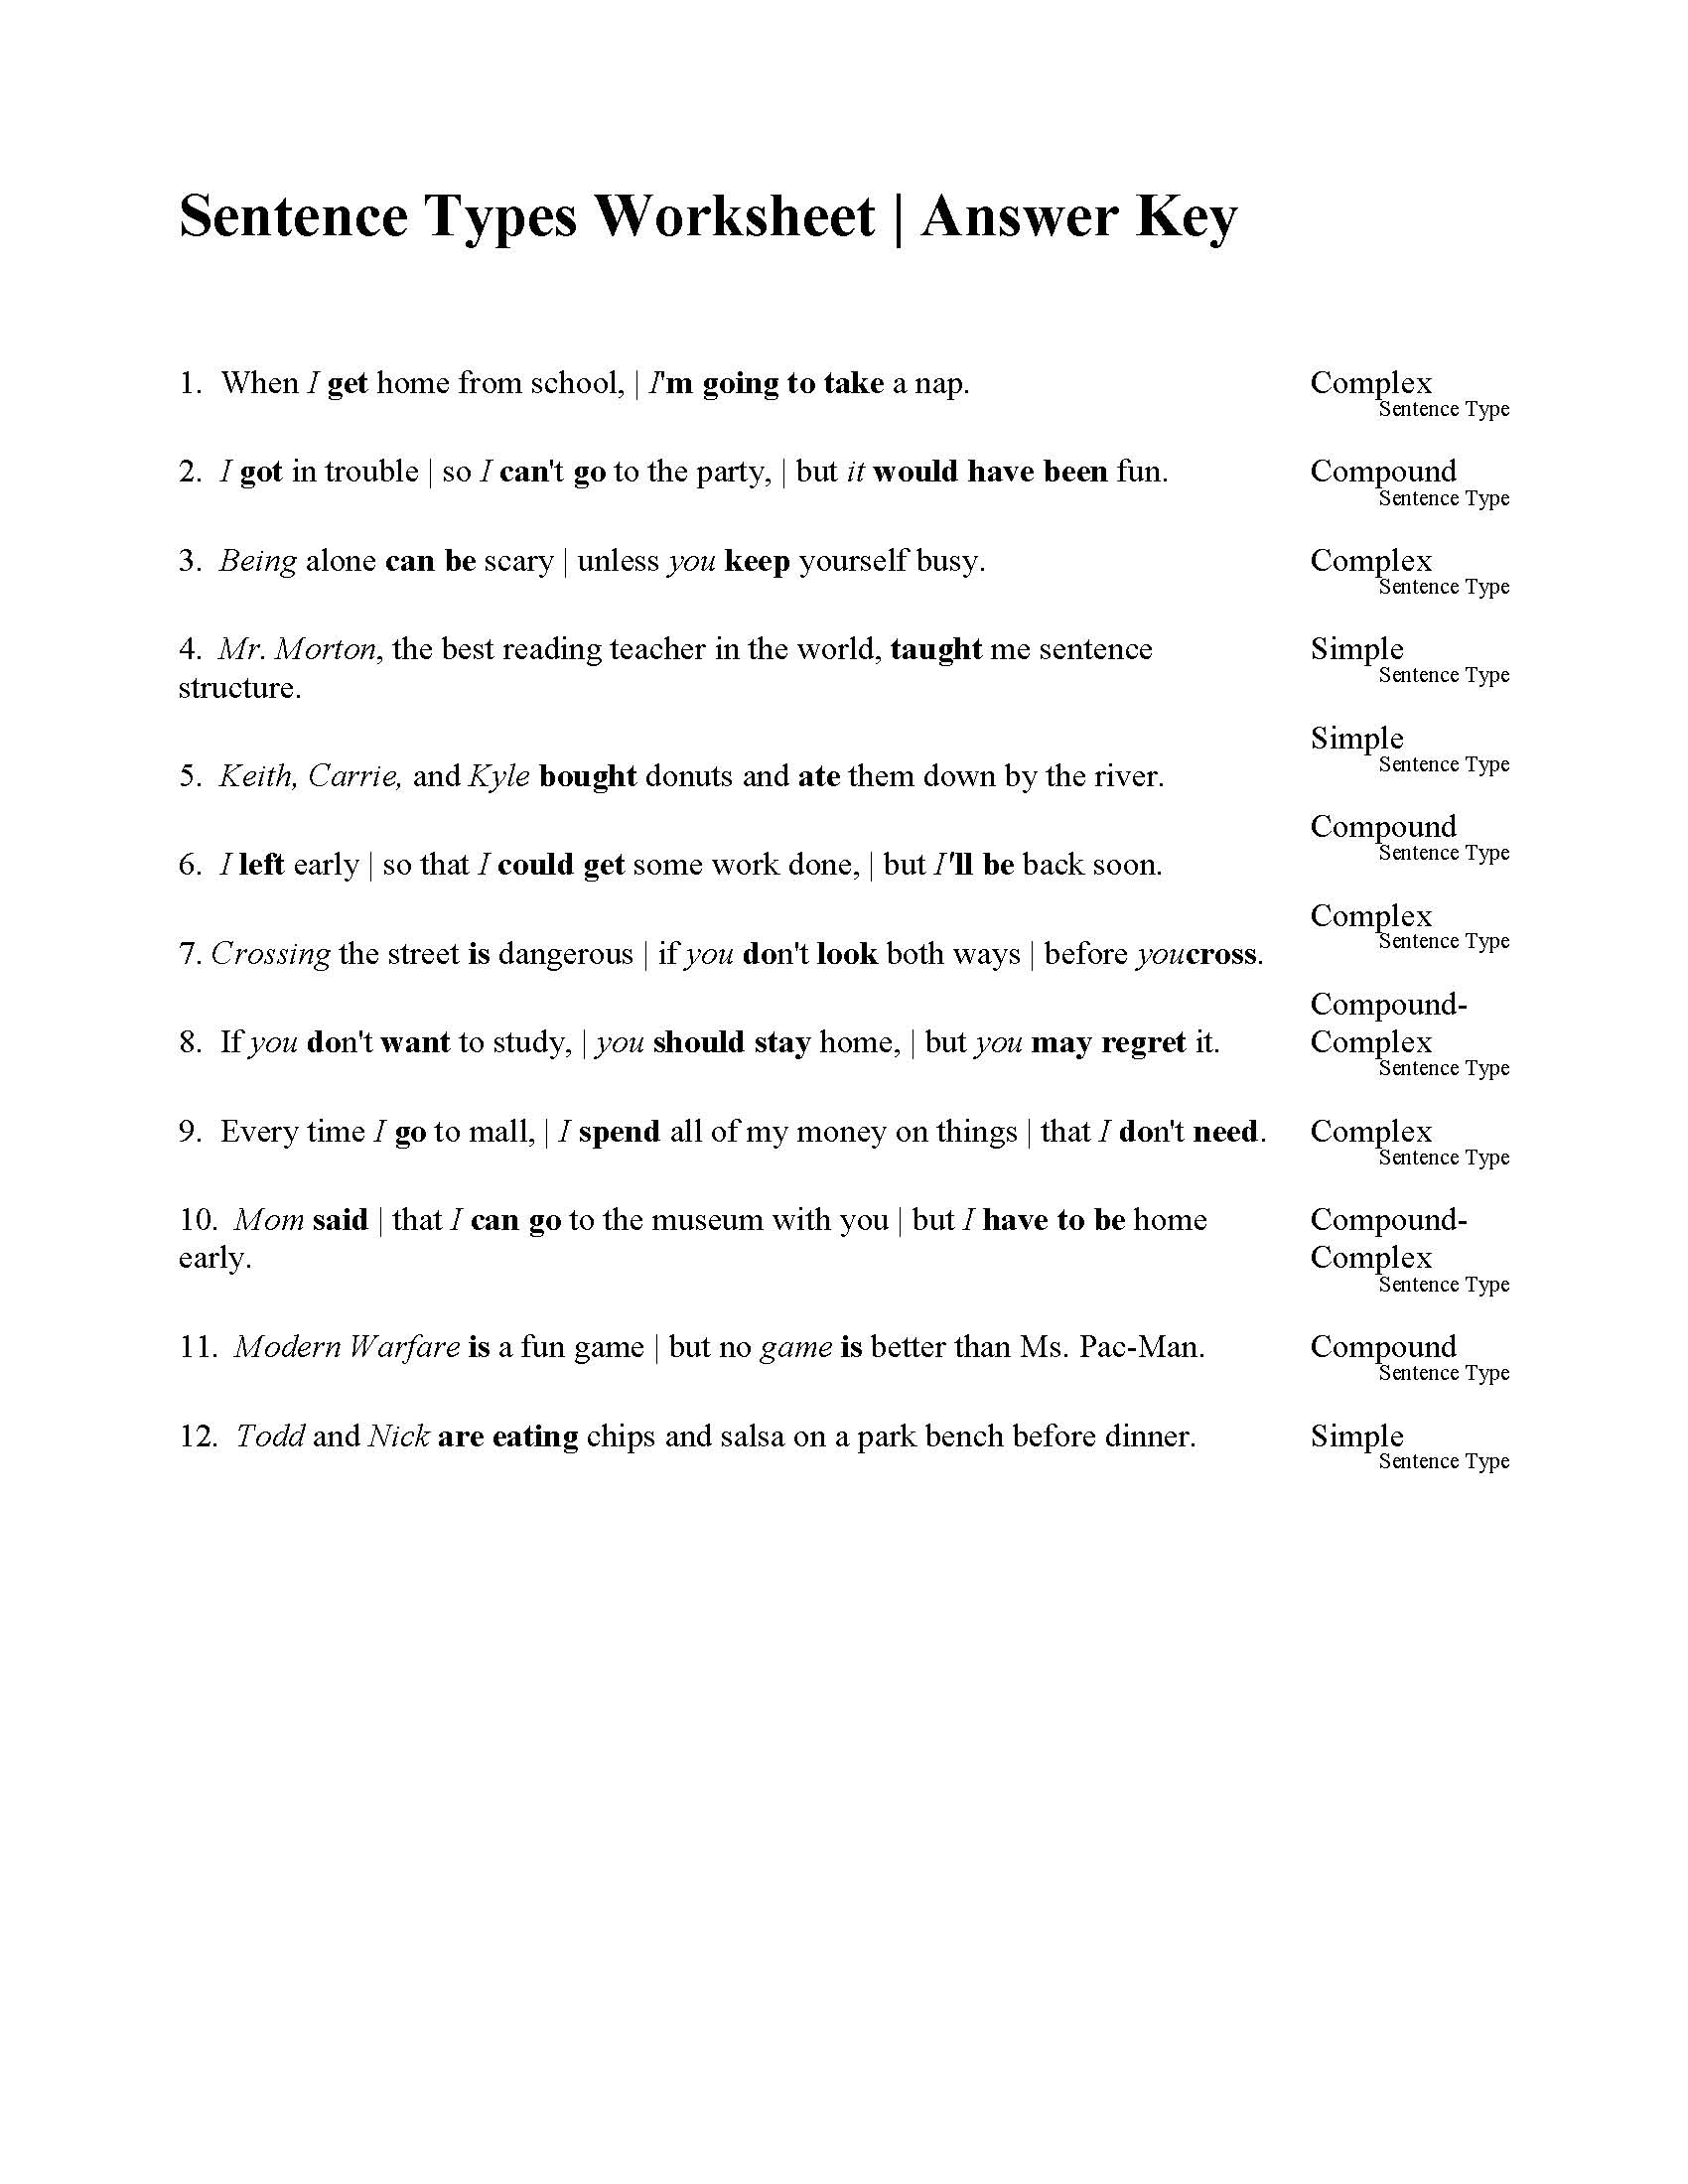 Sentences Types Worksheet Answers